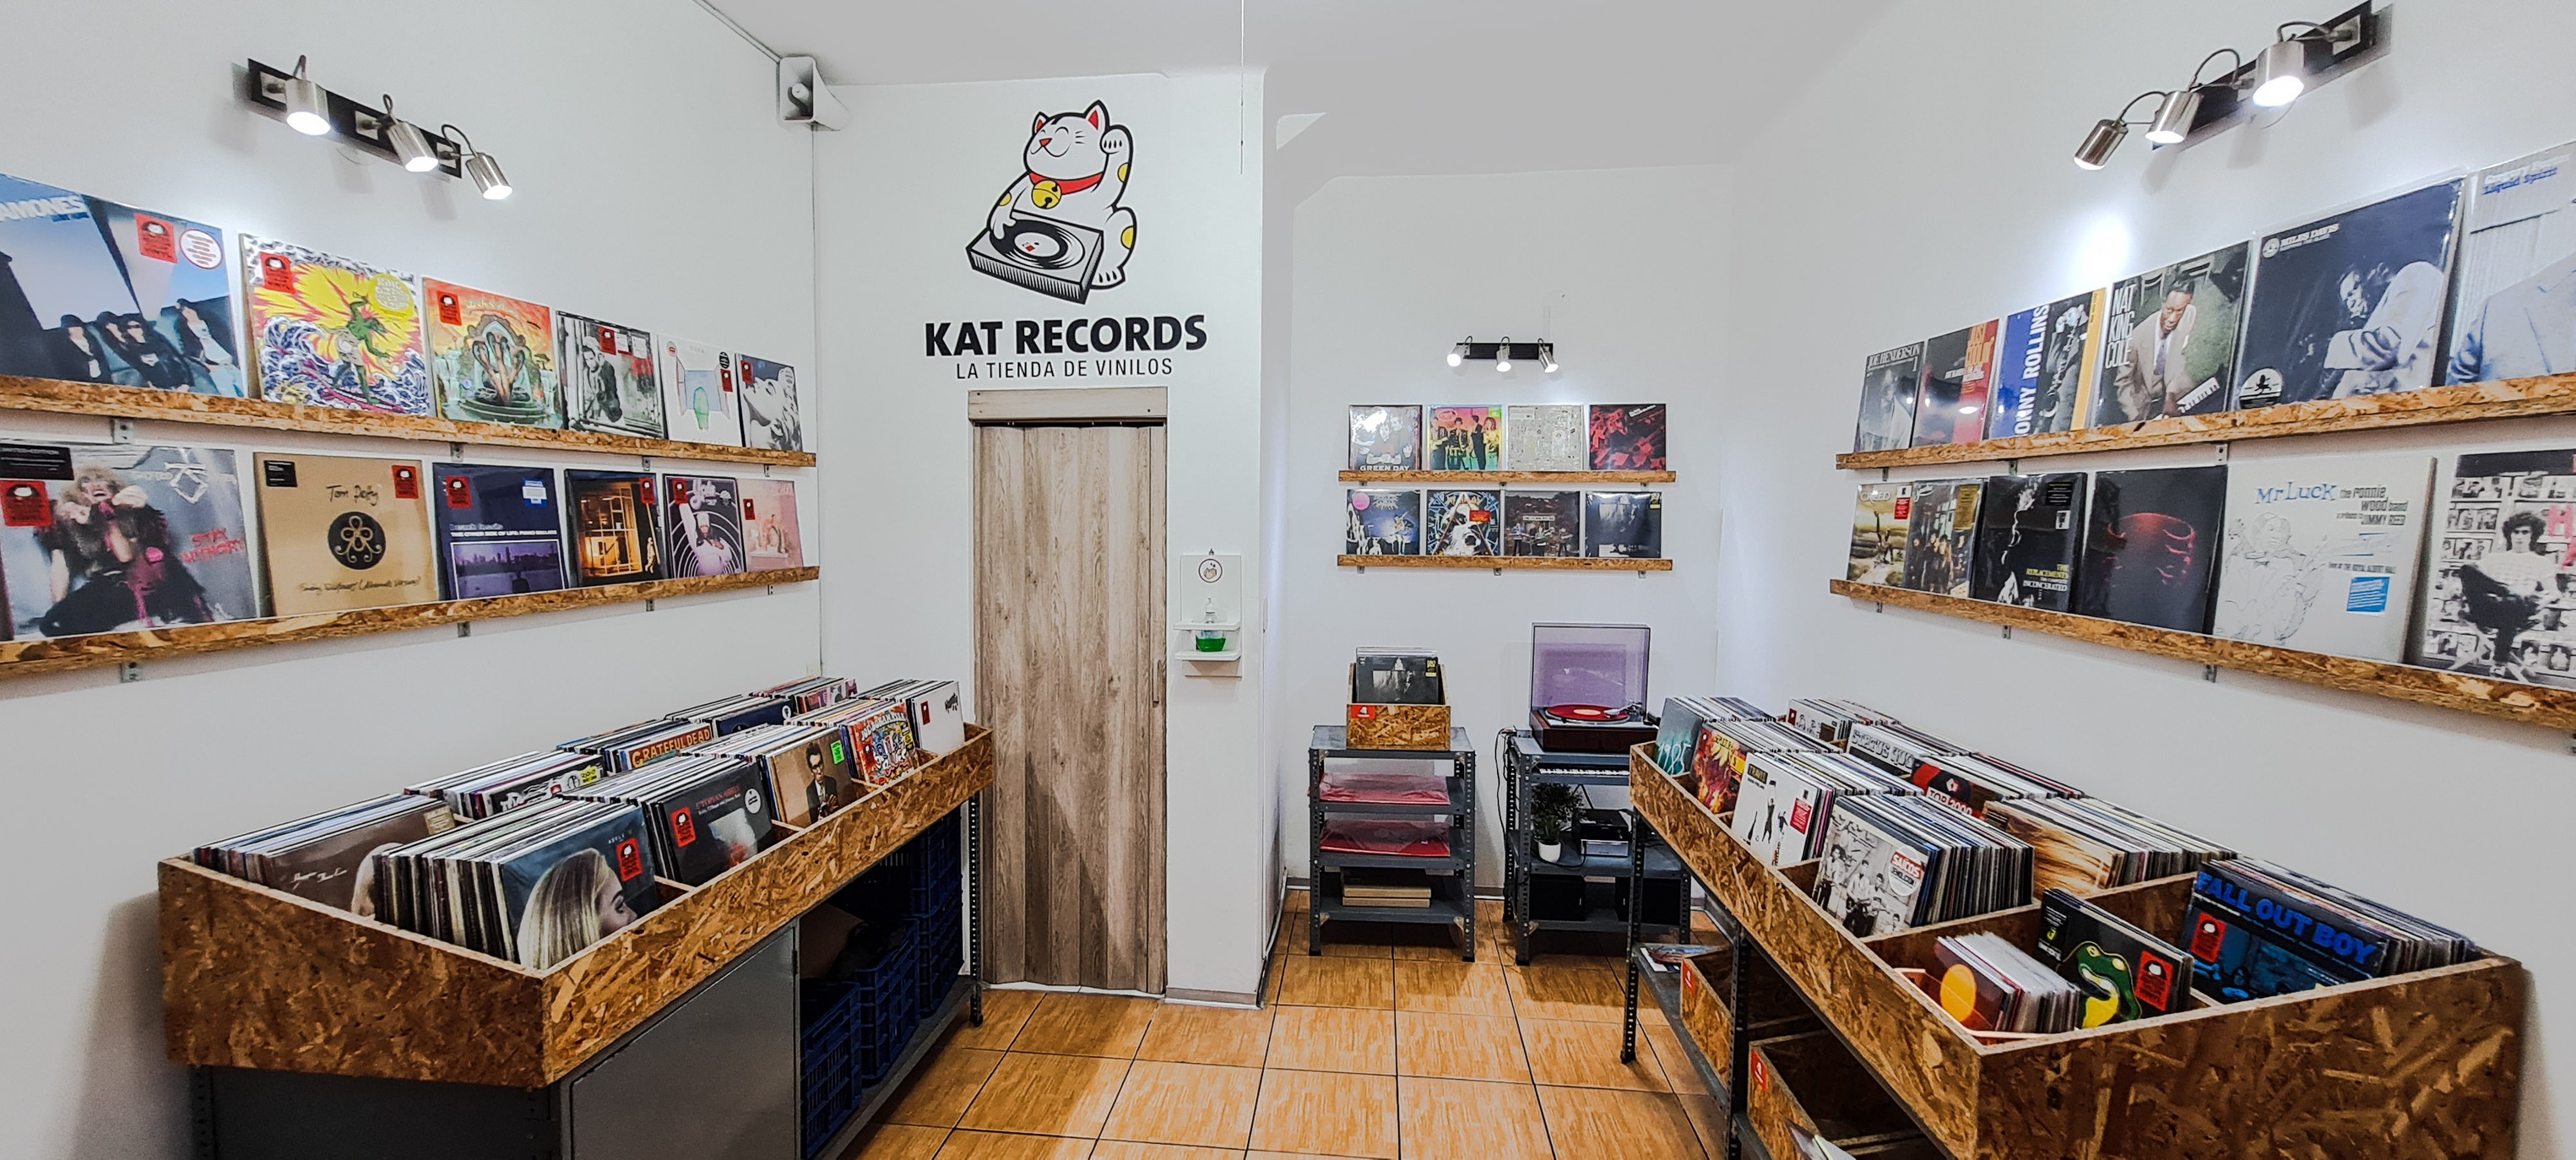 kat records